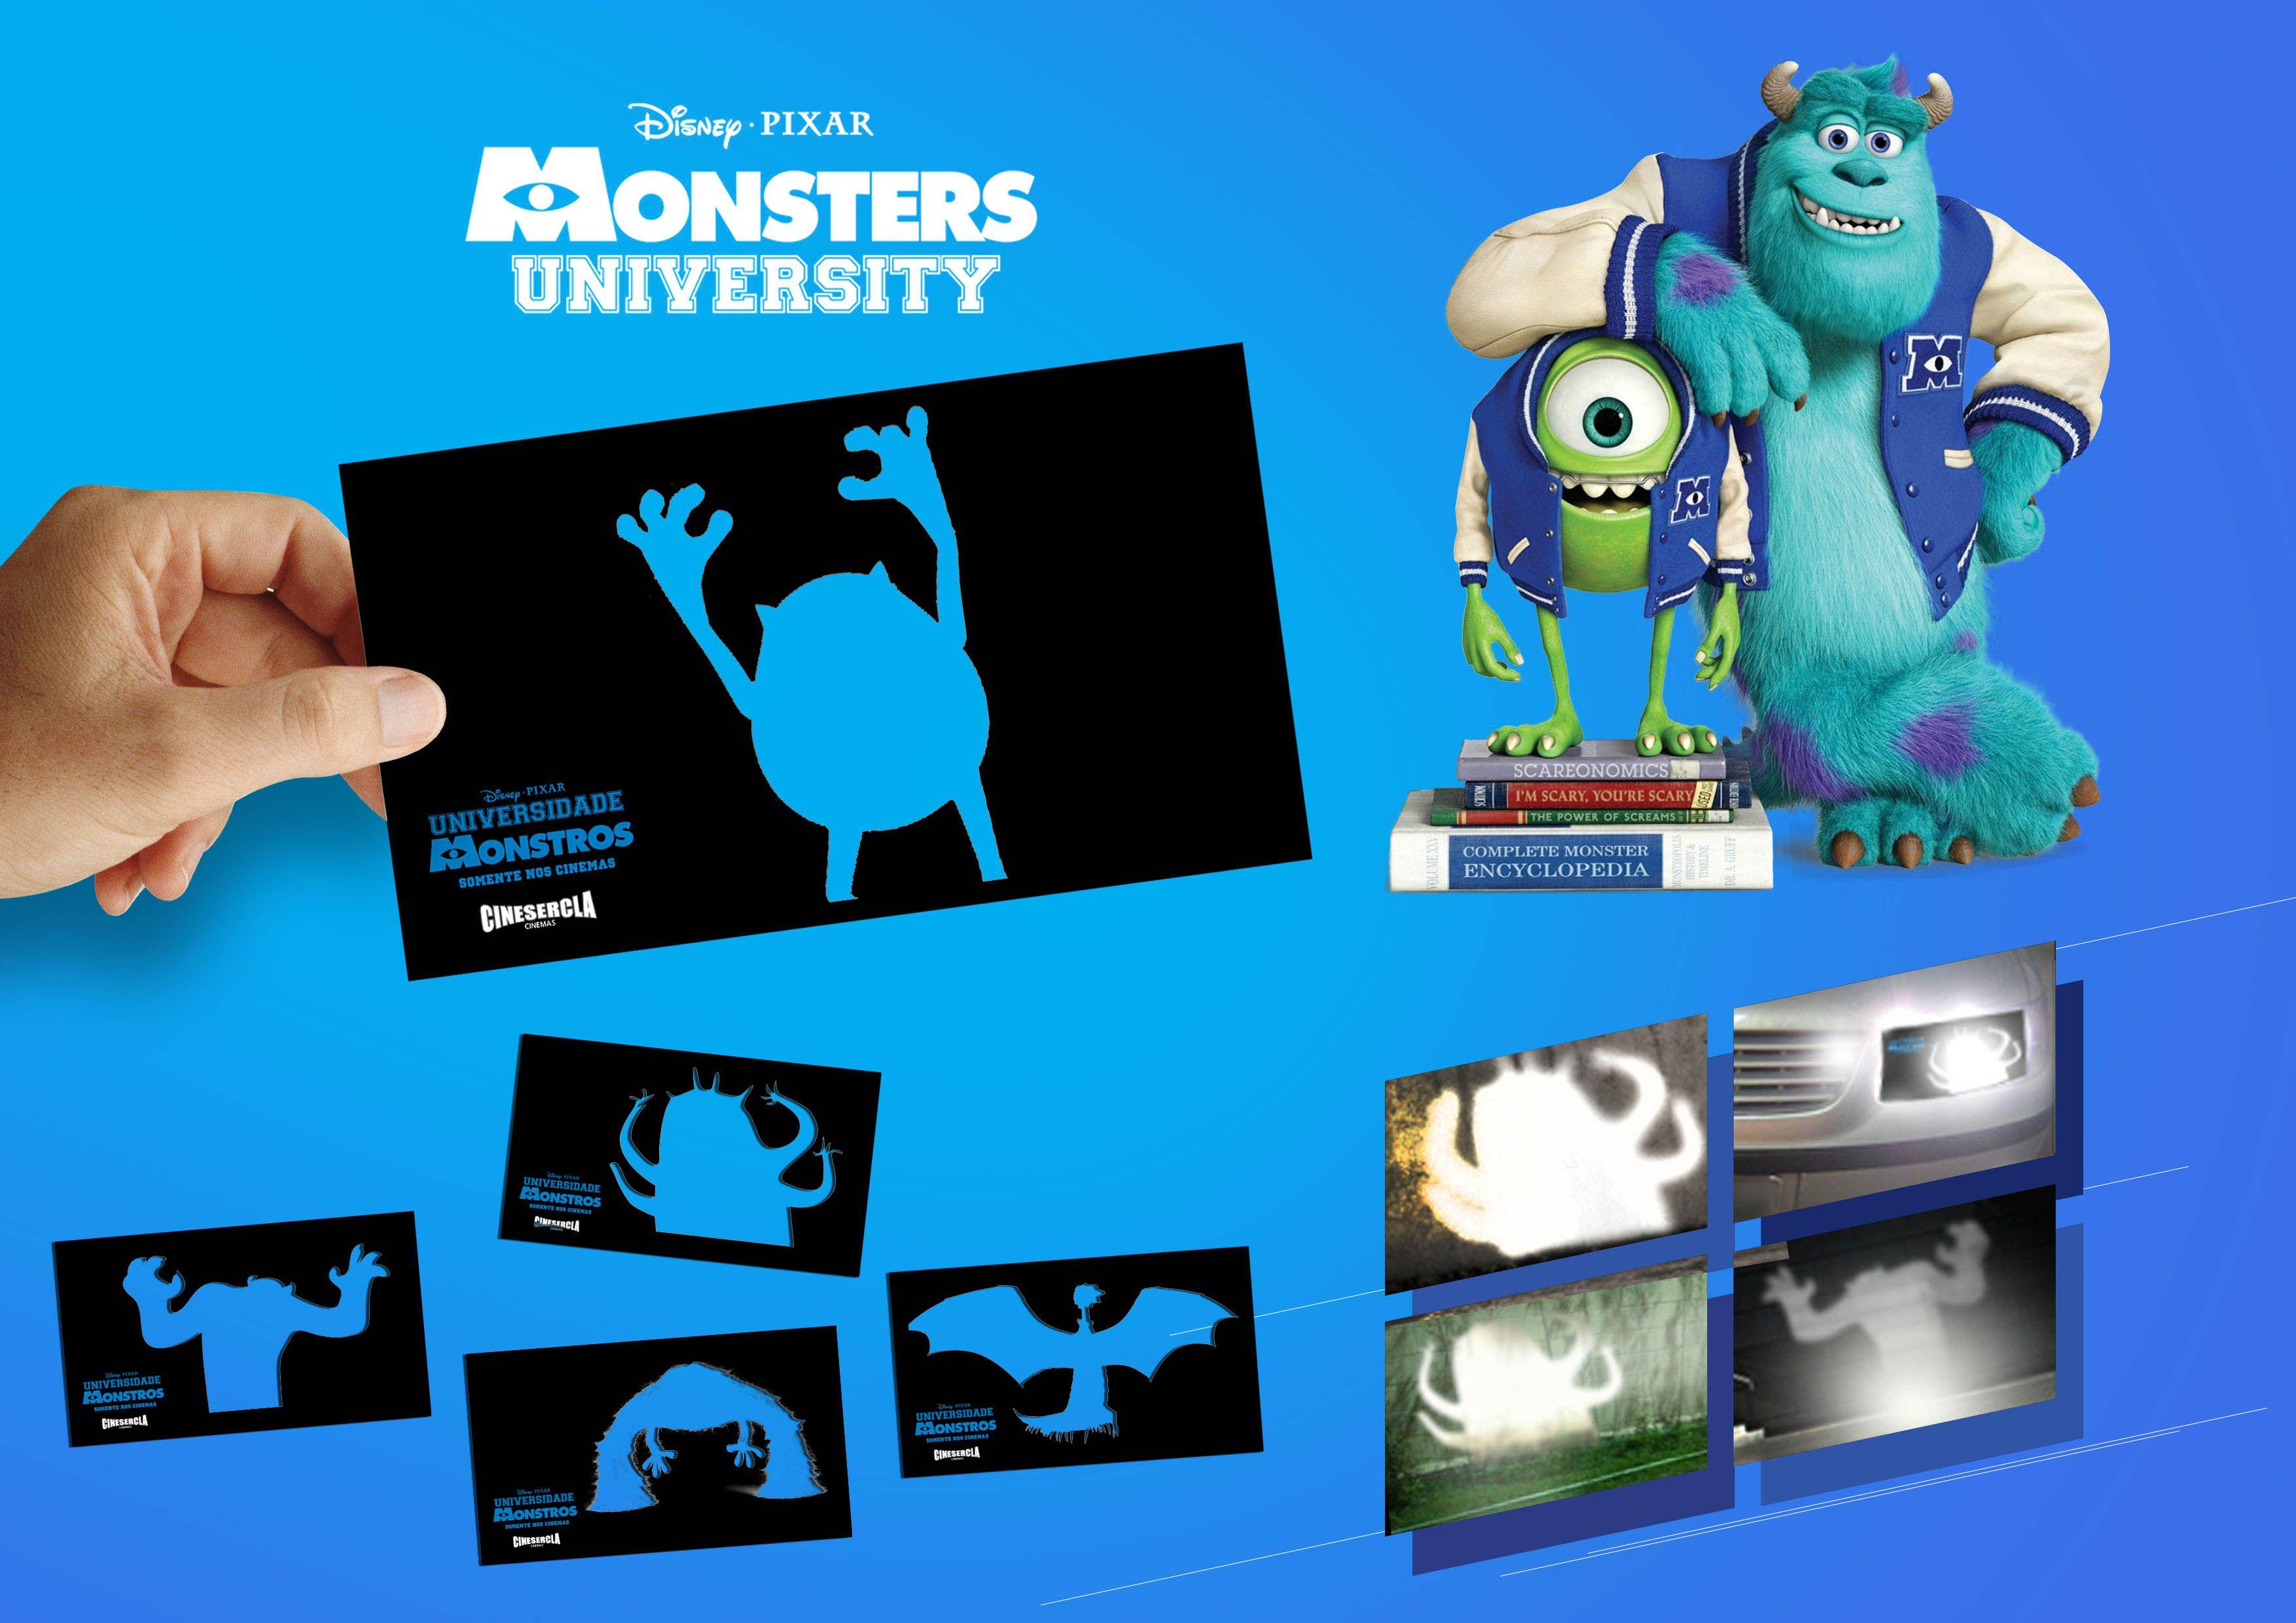 Disney Pixar Monsters University Logo - Custom Decals Draw Attention To Monsters University